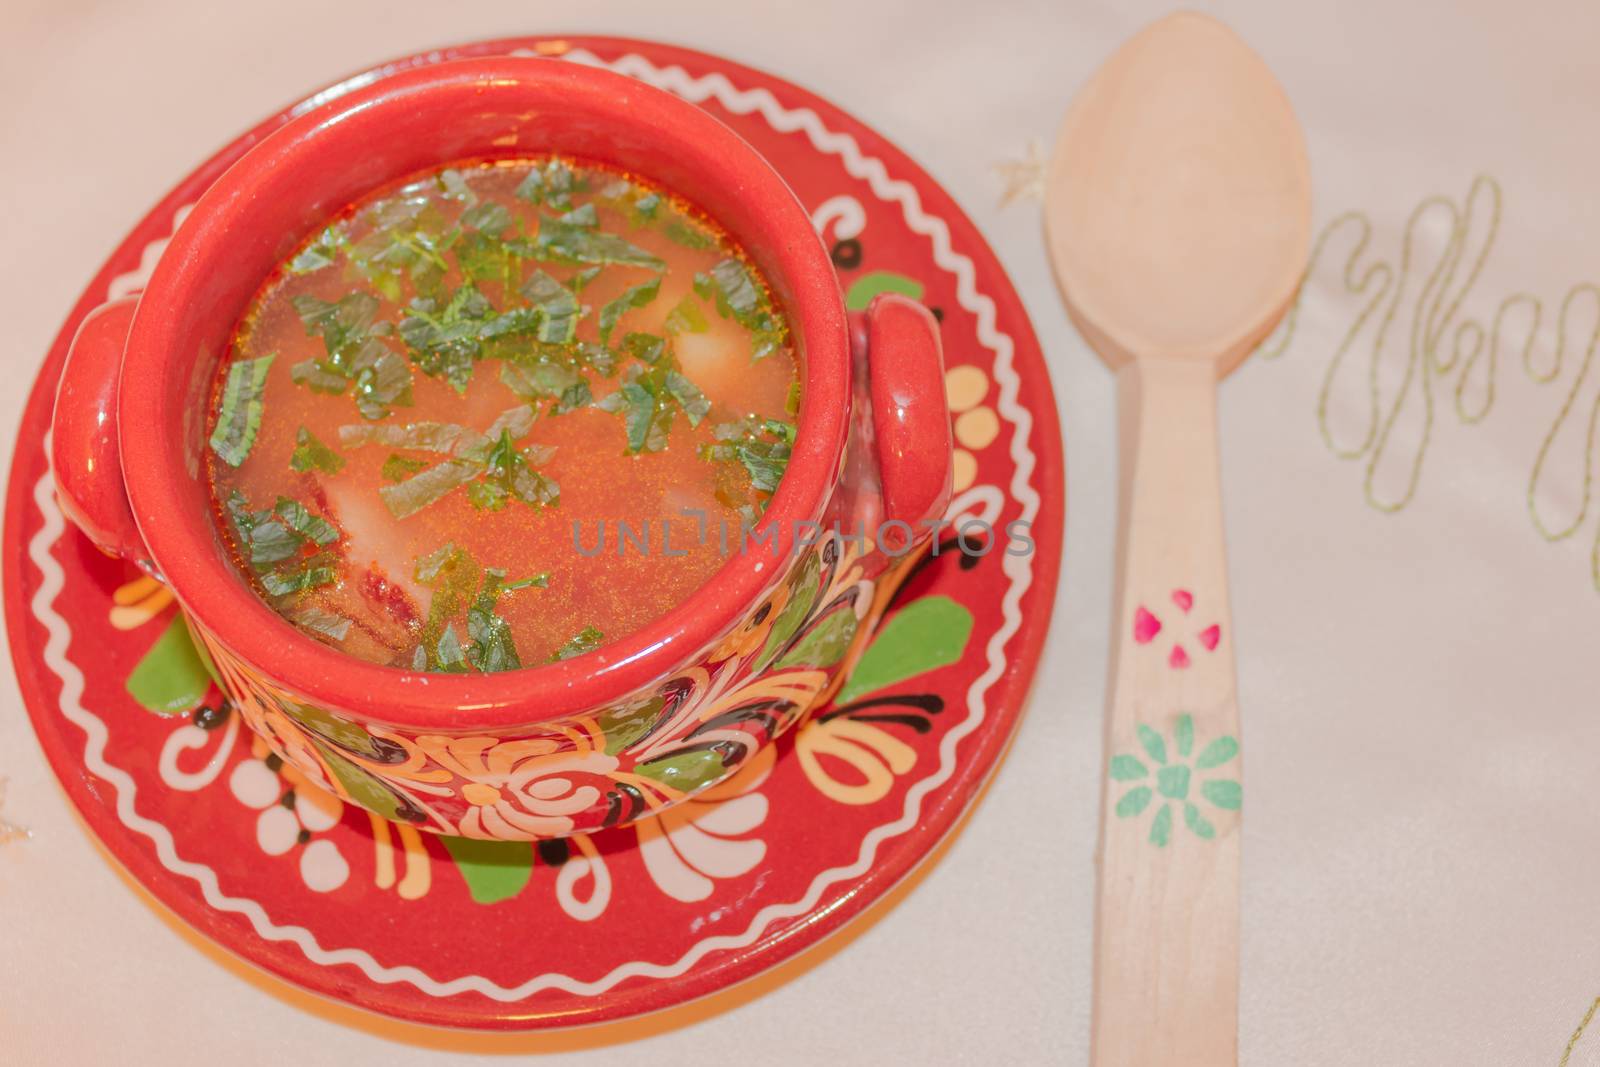  Romanian meat soup by robertboss